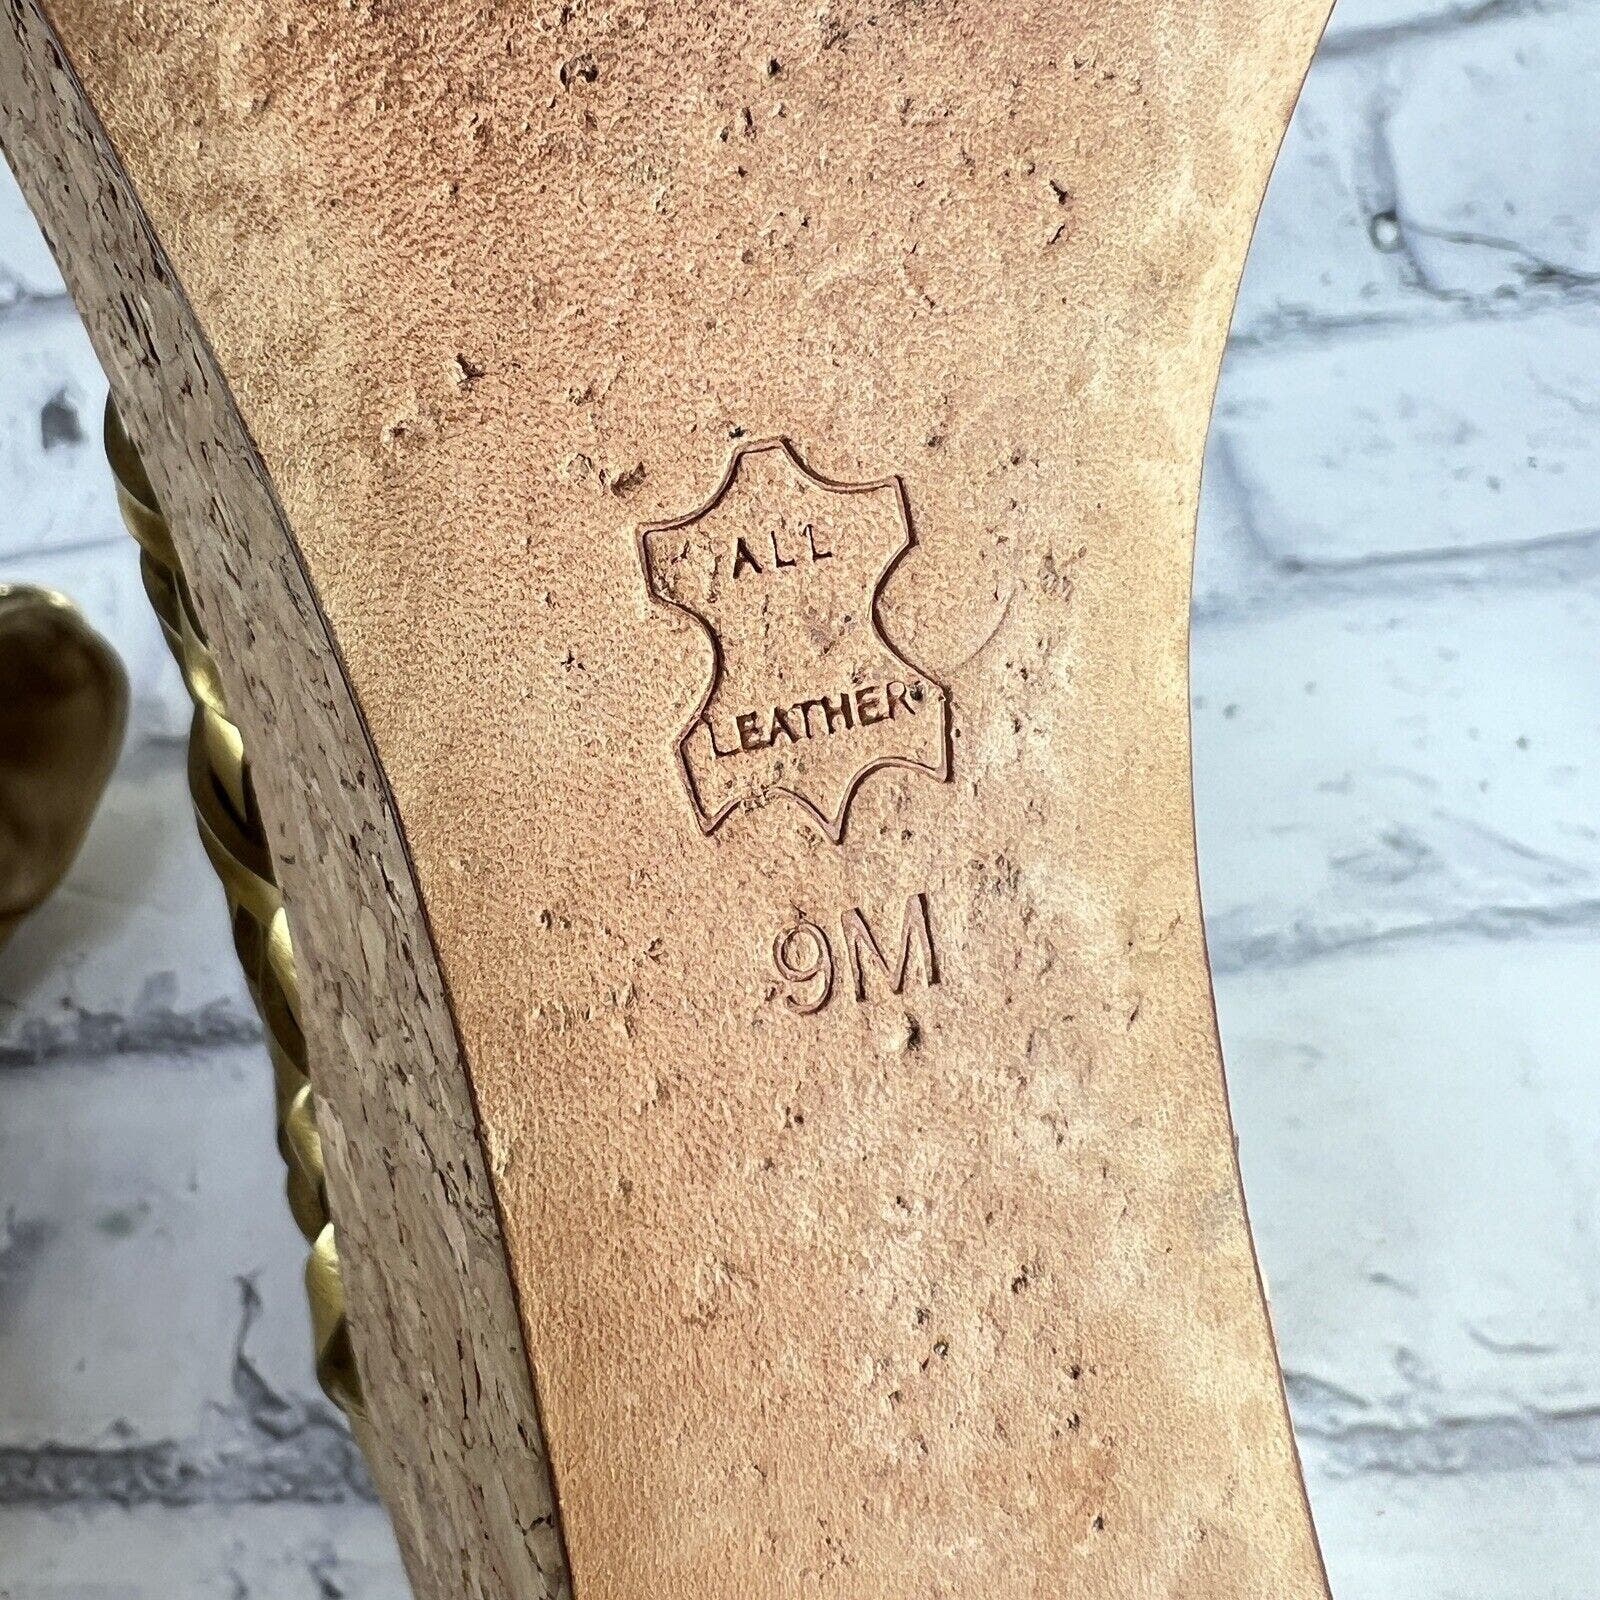 Tory Burch Wedge Platform Sandals Women’s 9 M Leather Cork Heels Gold Strappy